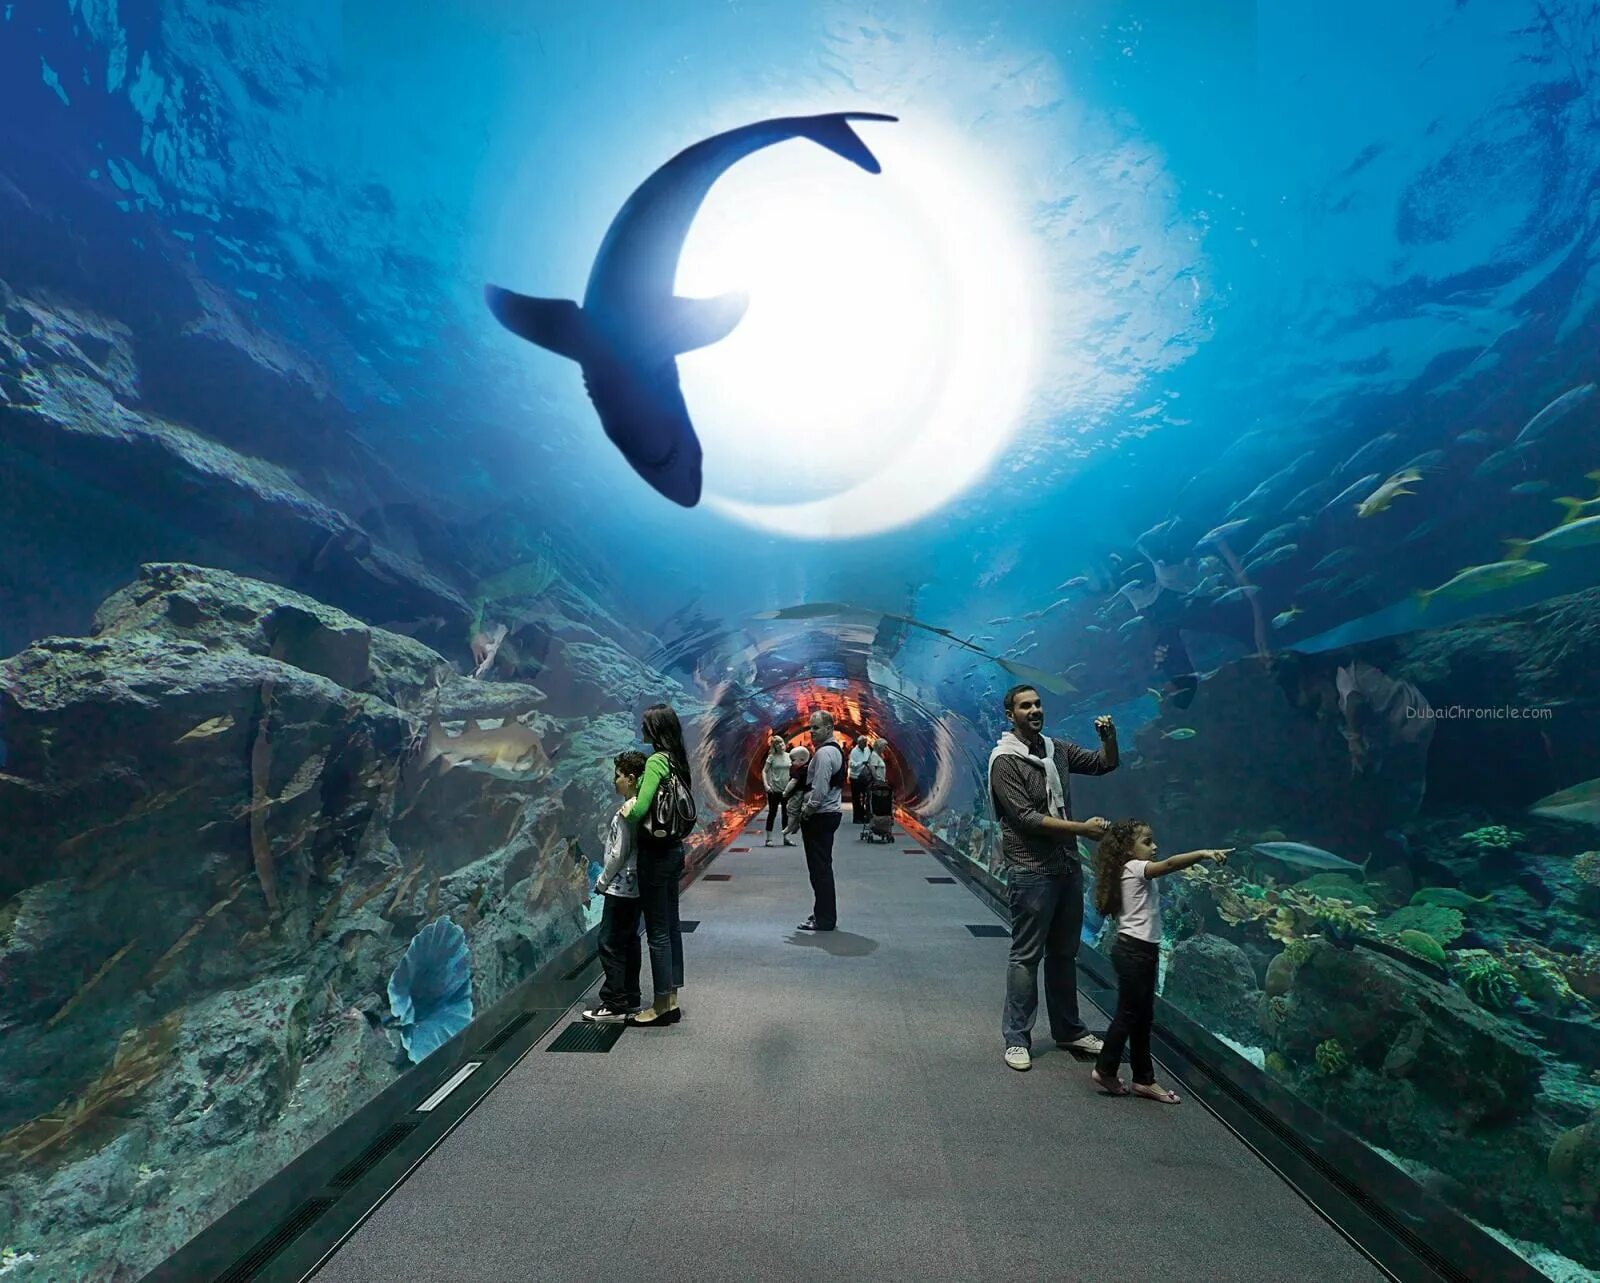 Открытие самого большого океанариума. Дубай Молл аквариум. Дубайский океанариум в Дубай молле. Аквариум "Dubai Mall" (ОАЭ, Дубай). Дубай аквариум в Дубай Молл.